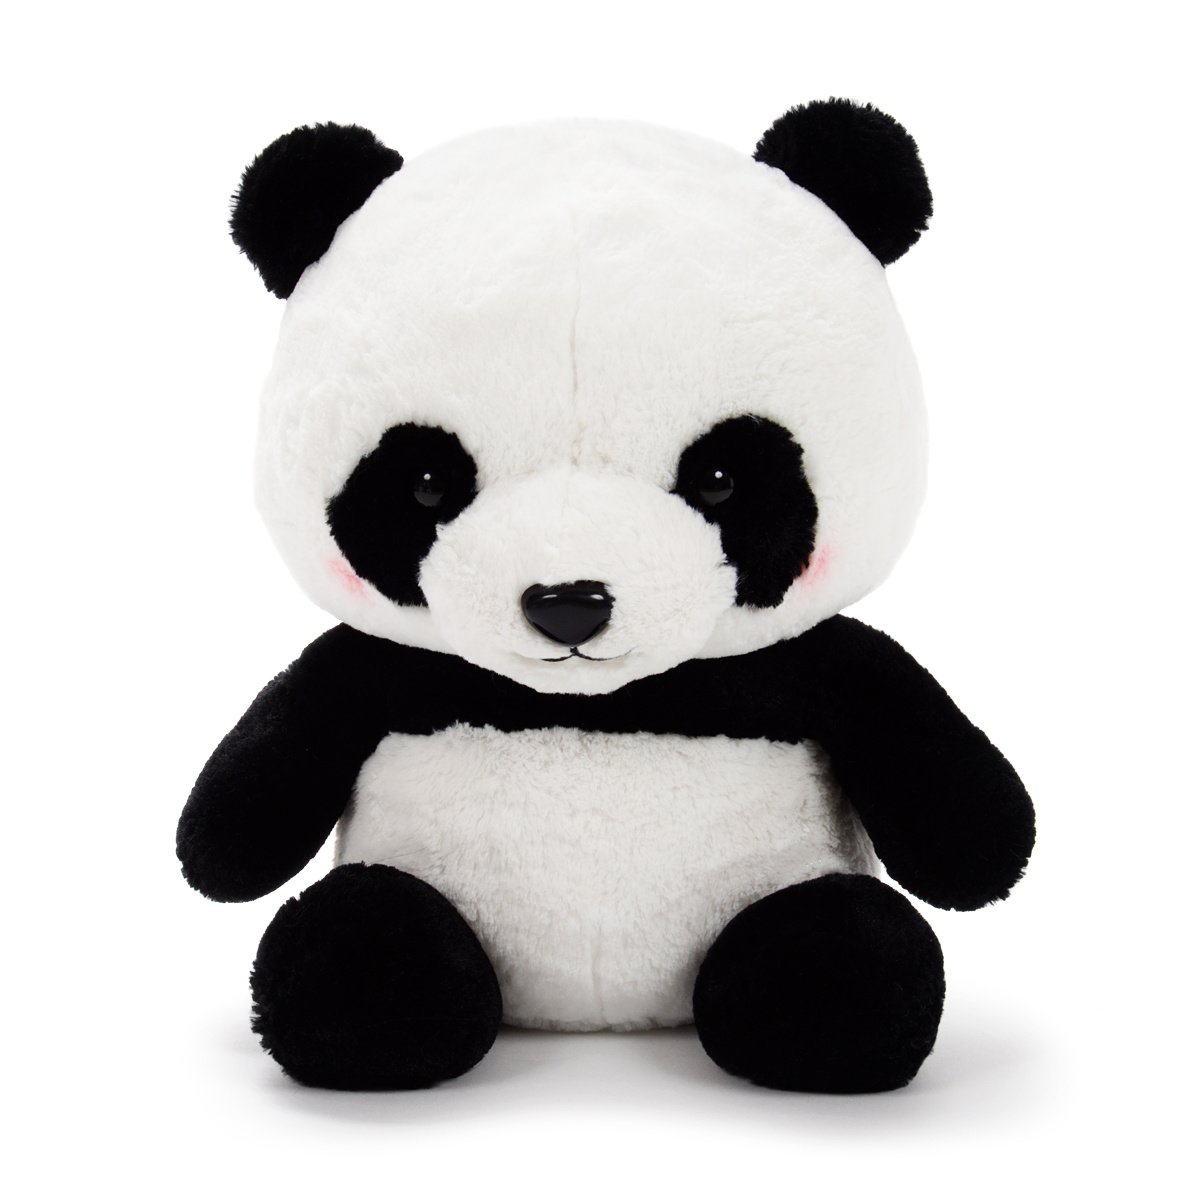 Plush Panda, Amuse, Honwaka Panda Baby, Panda Boy, Black / White, 16 Inches